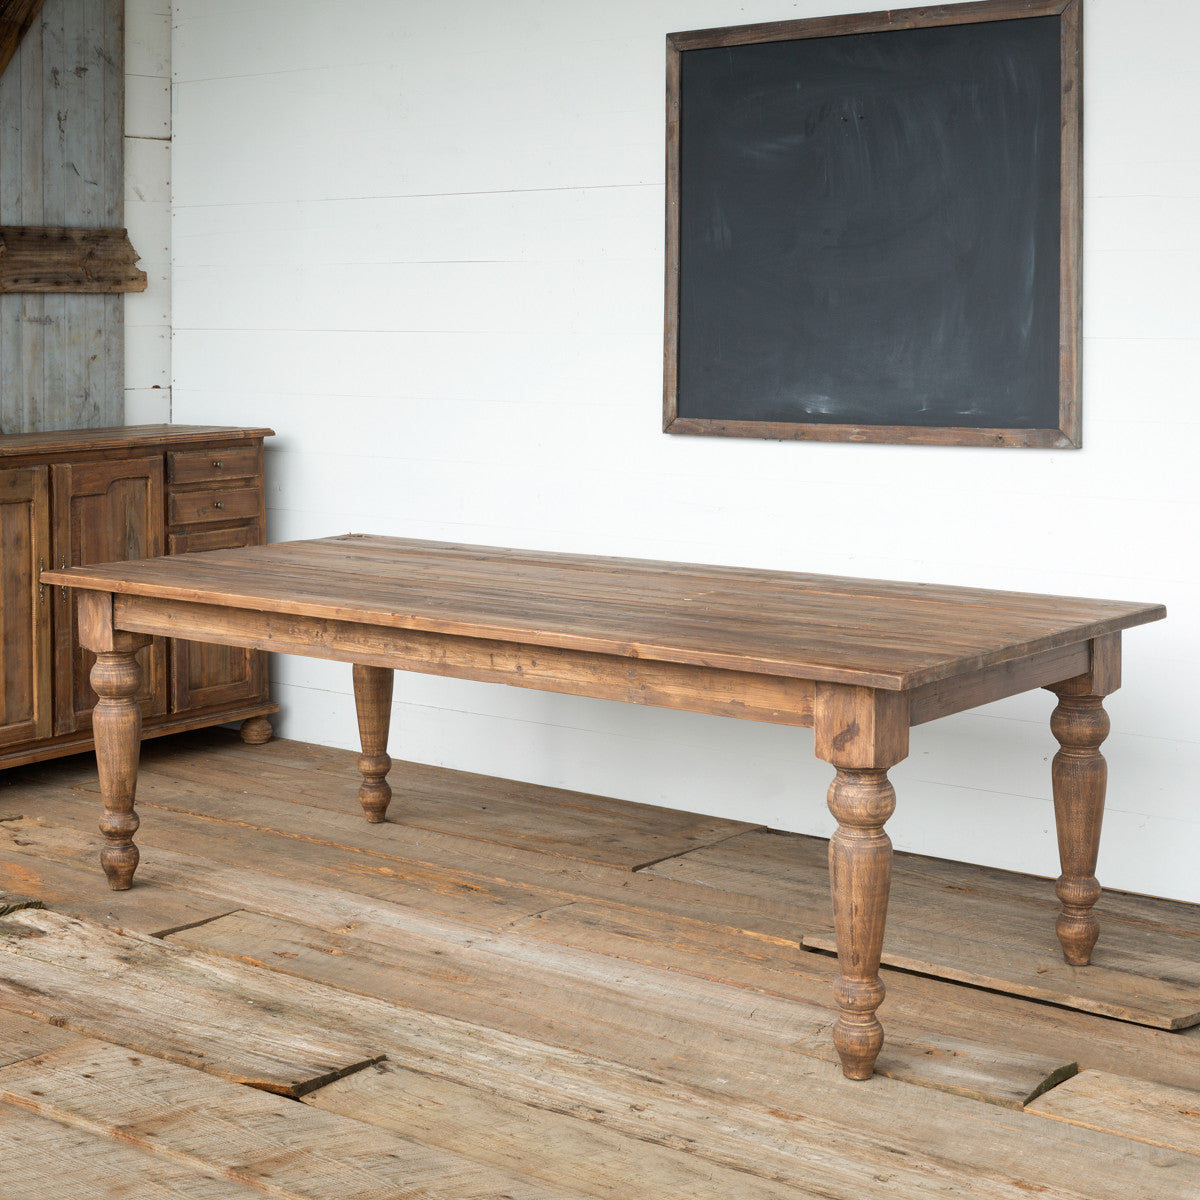 Rustic Pine Farm Table, Park Hill Farm Tables for sale